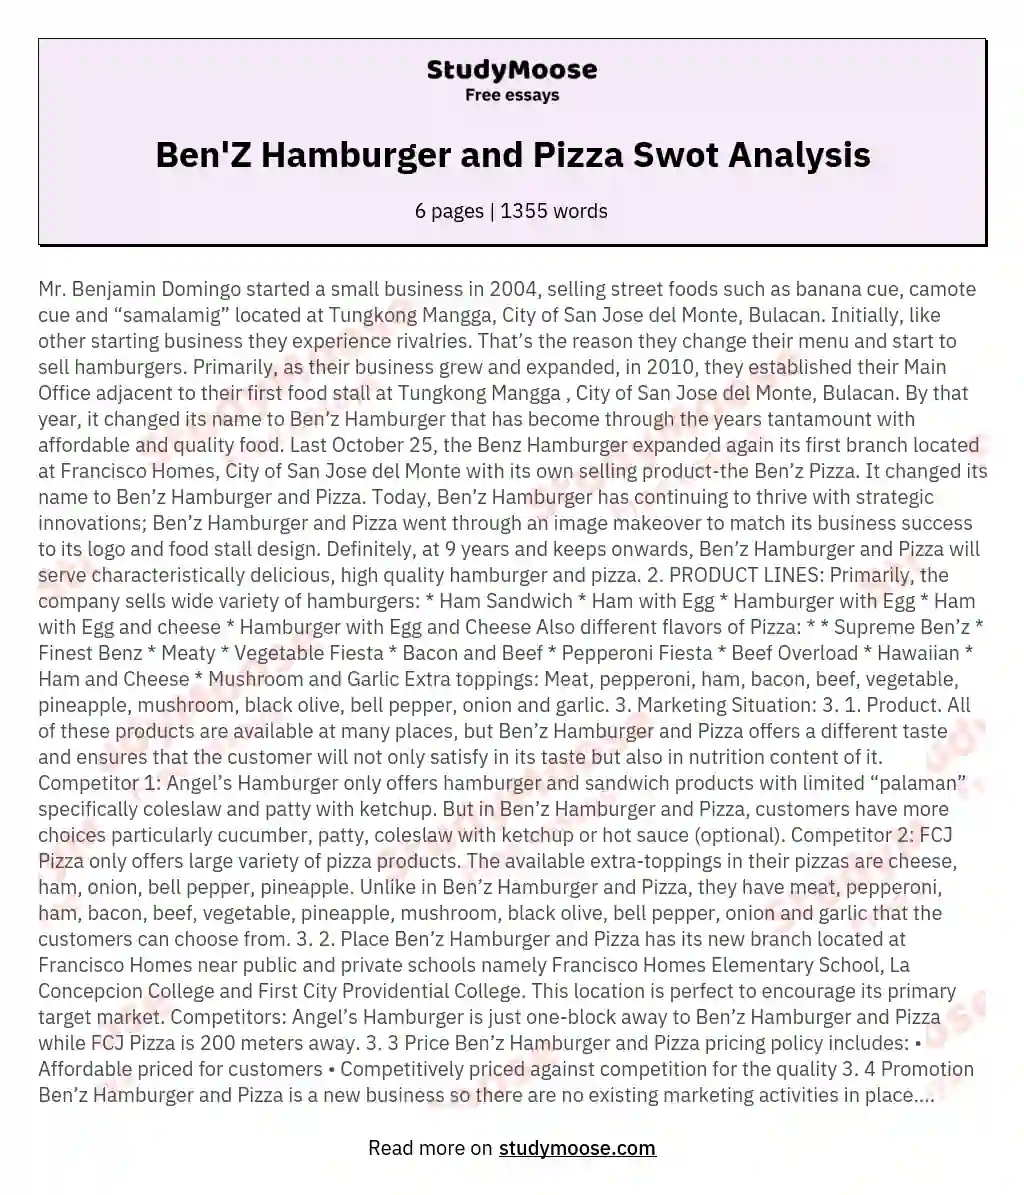 Ben'Z Hamburger and Pizza Swot Analysis essay